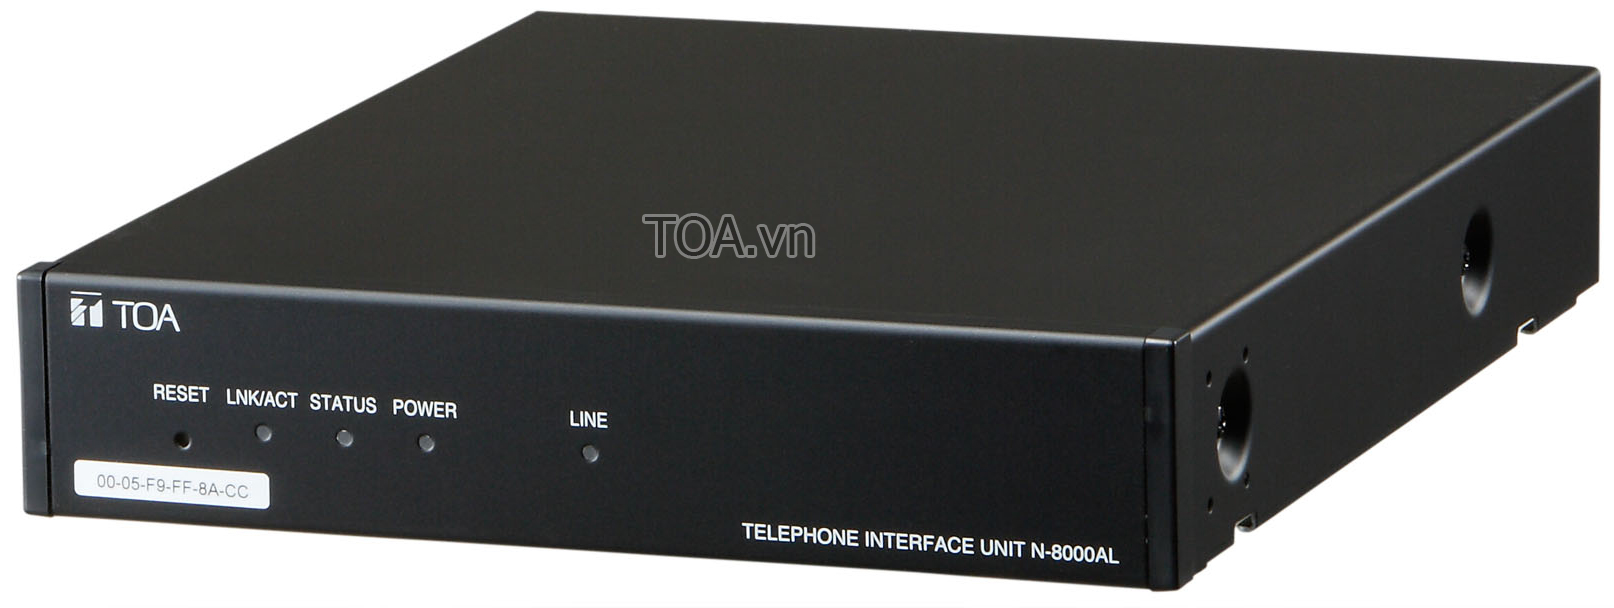 Bộ giao diện điện thoại TOA N-8000AL CE